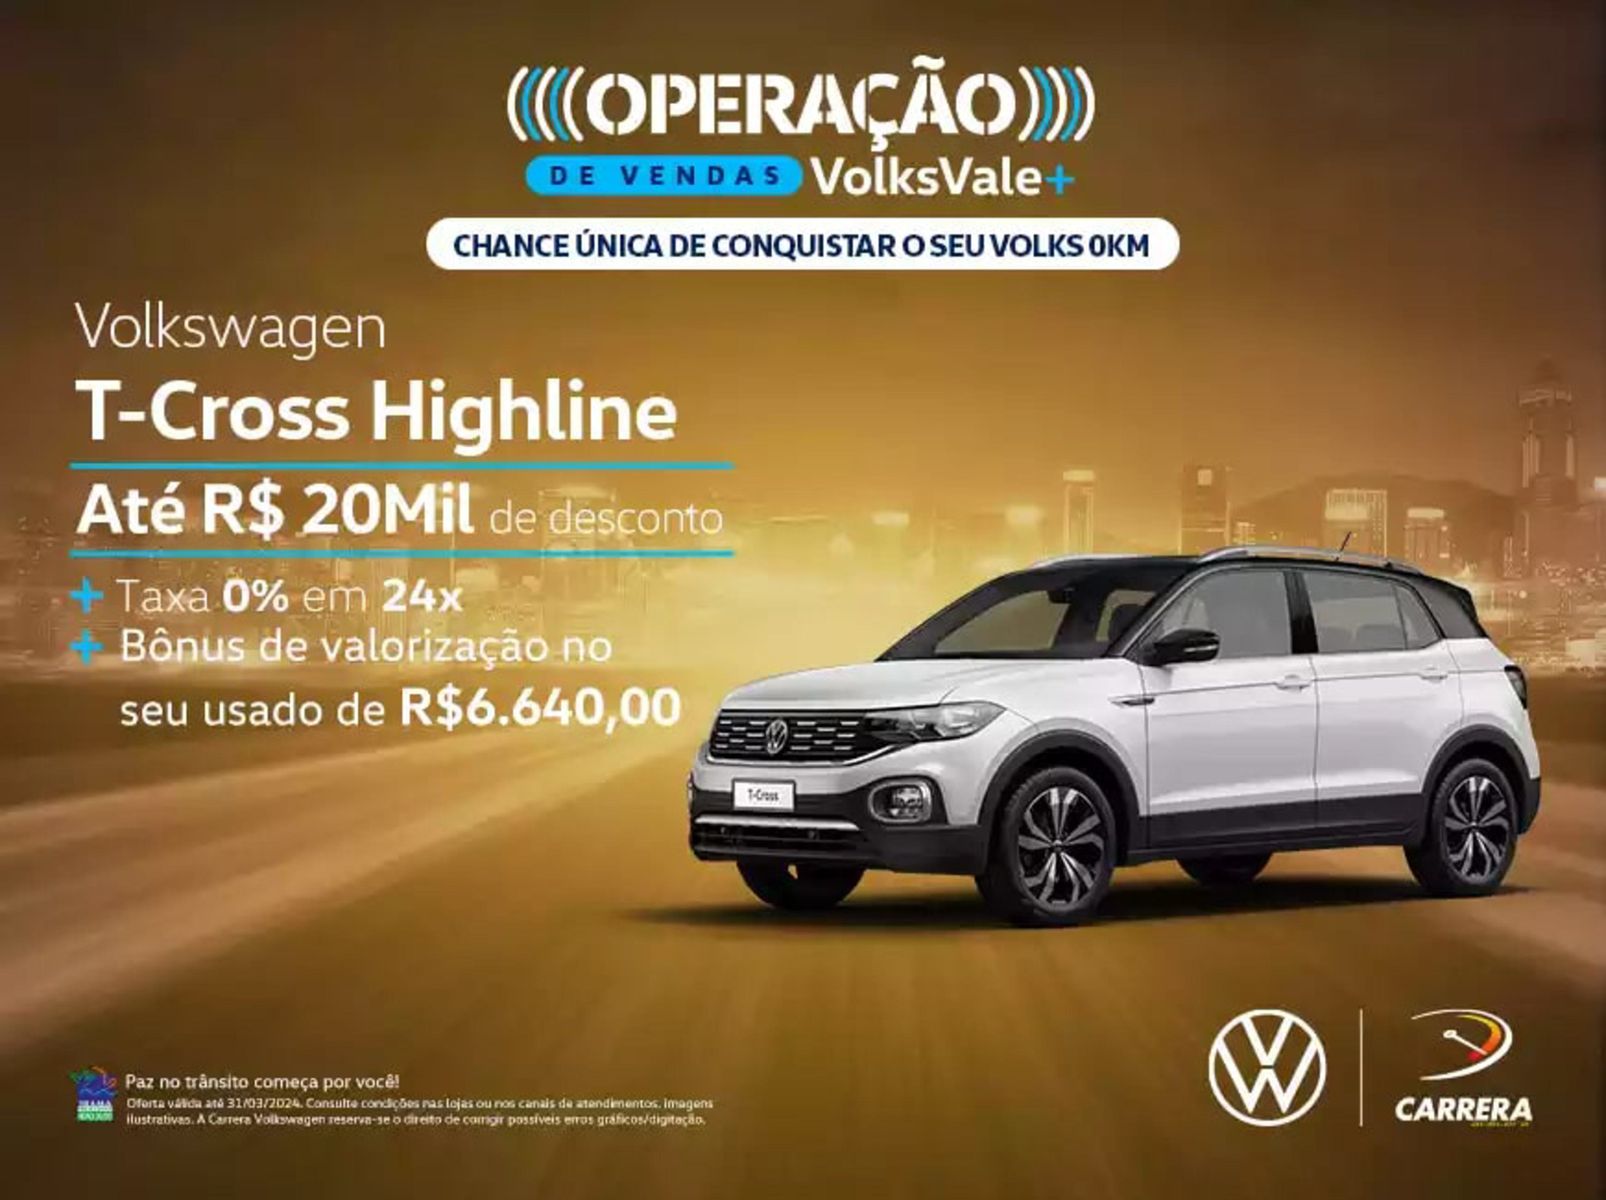 Volkswagen T-Cross Highline com desconto especial